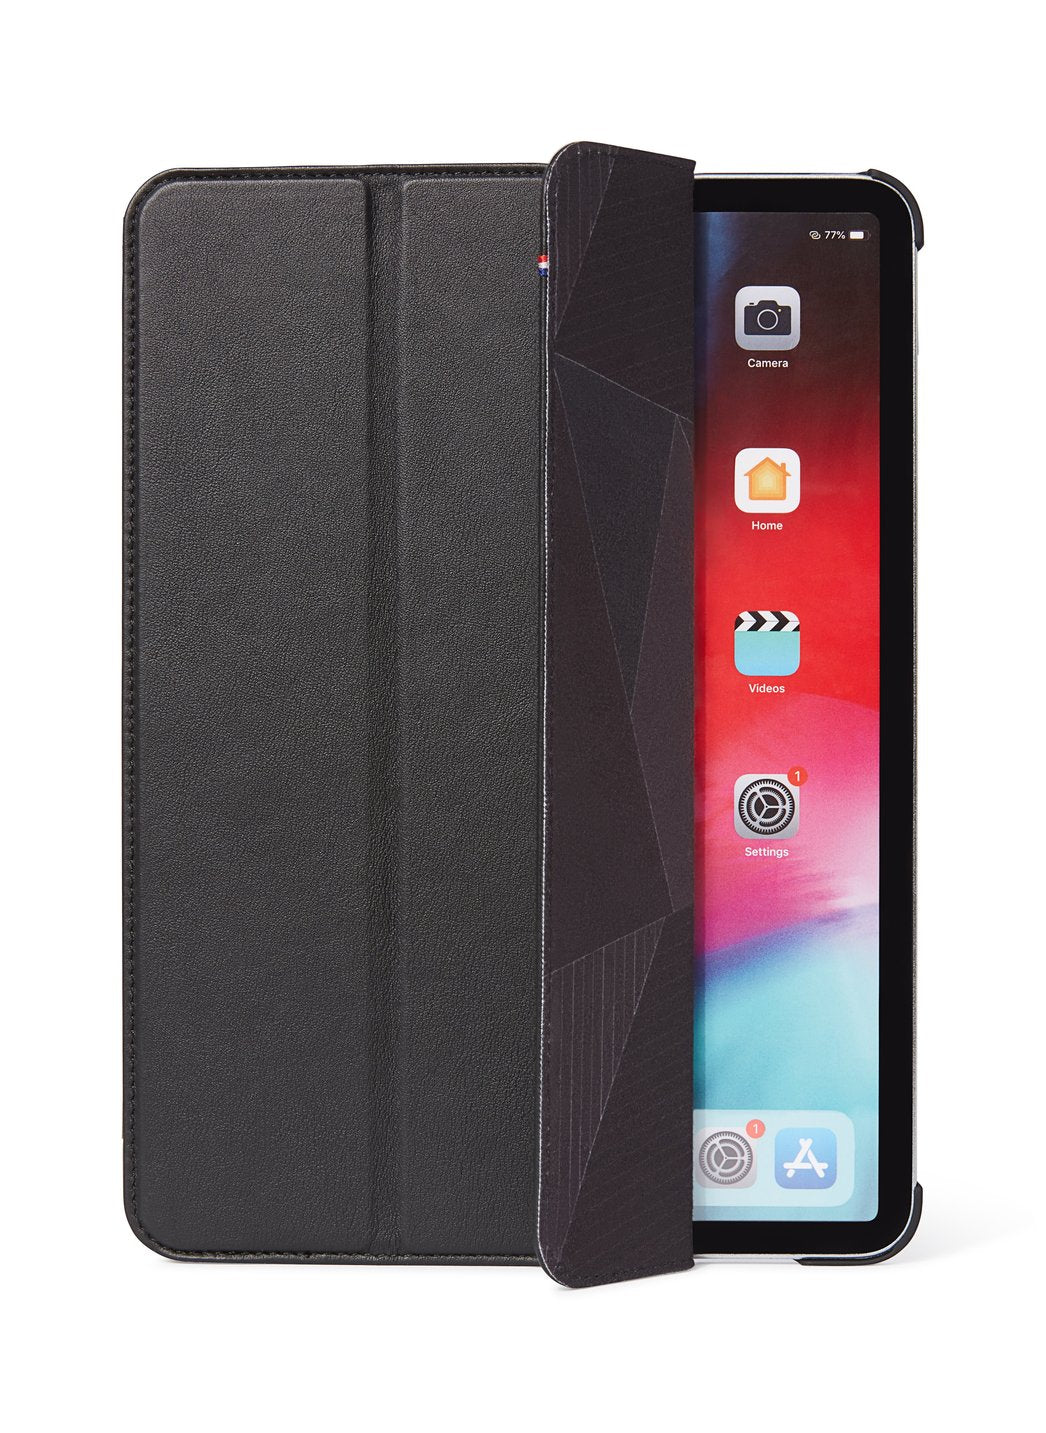 iPad Air 10.9 4th Gen (2020) Leather Hoesje Slim Cover zwart